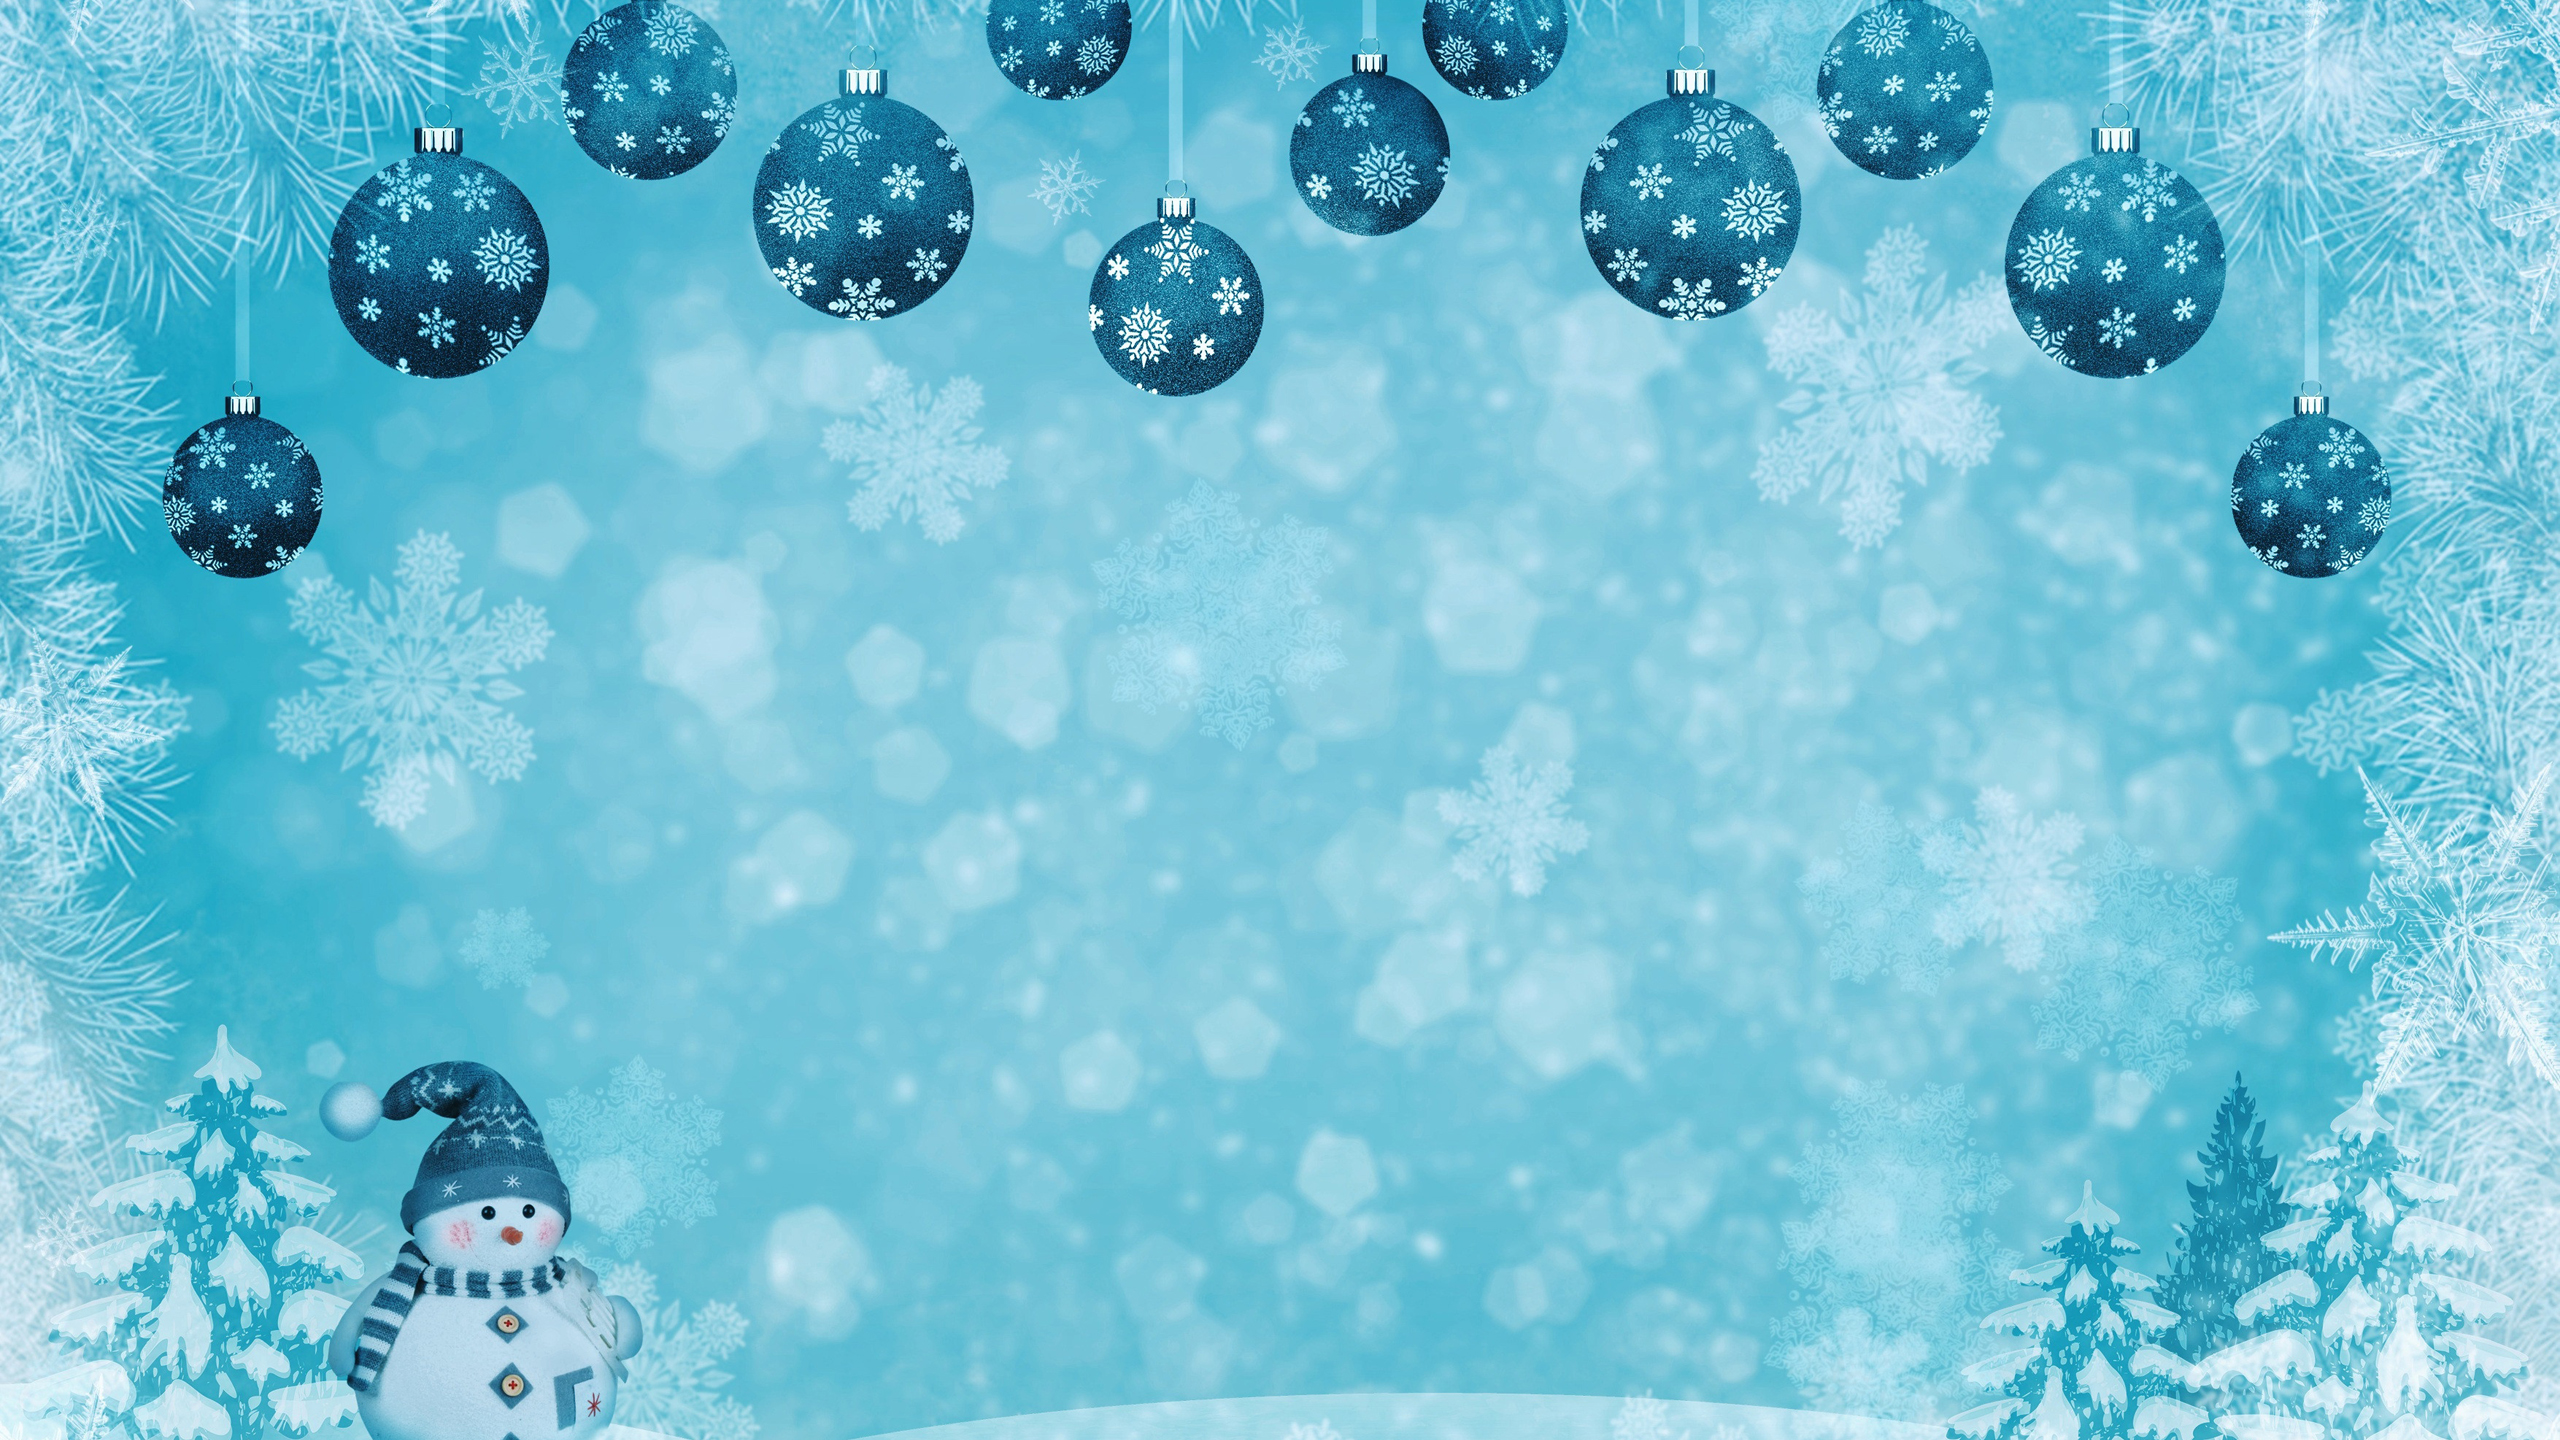 Christmas Ornaments Balls Snowflake And Snowman In Snowfall Wallpaper 2K Snowman